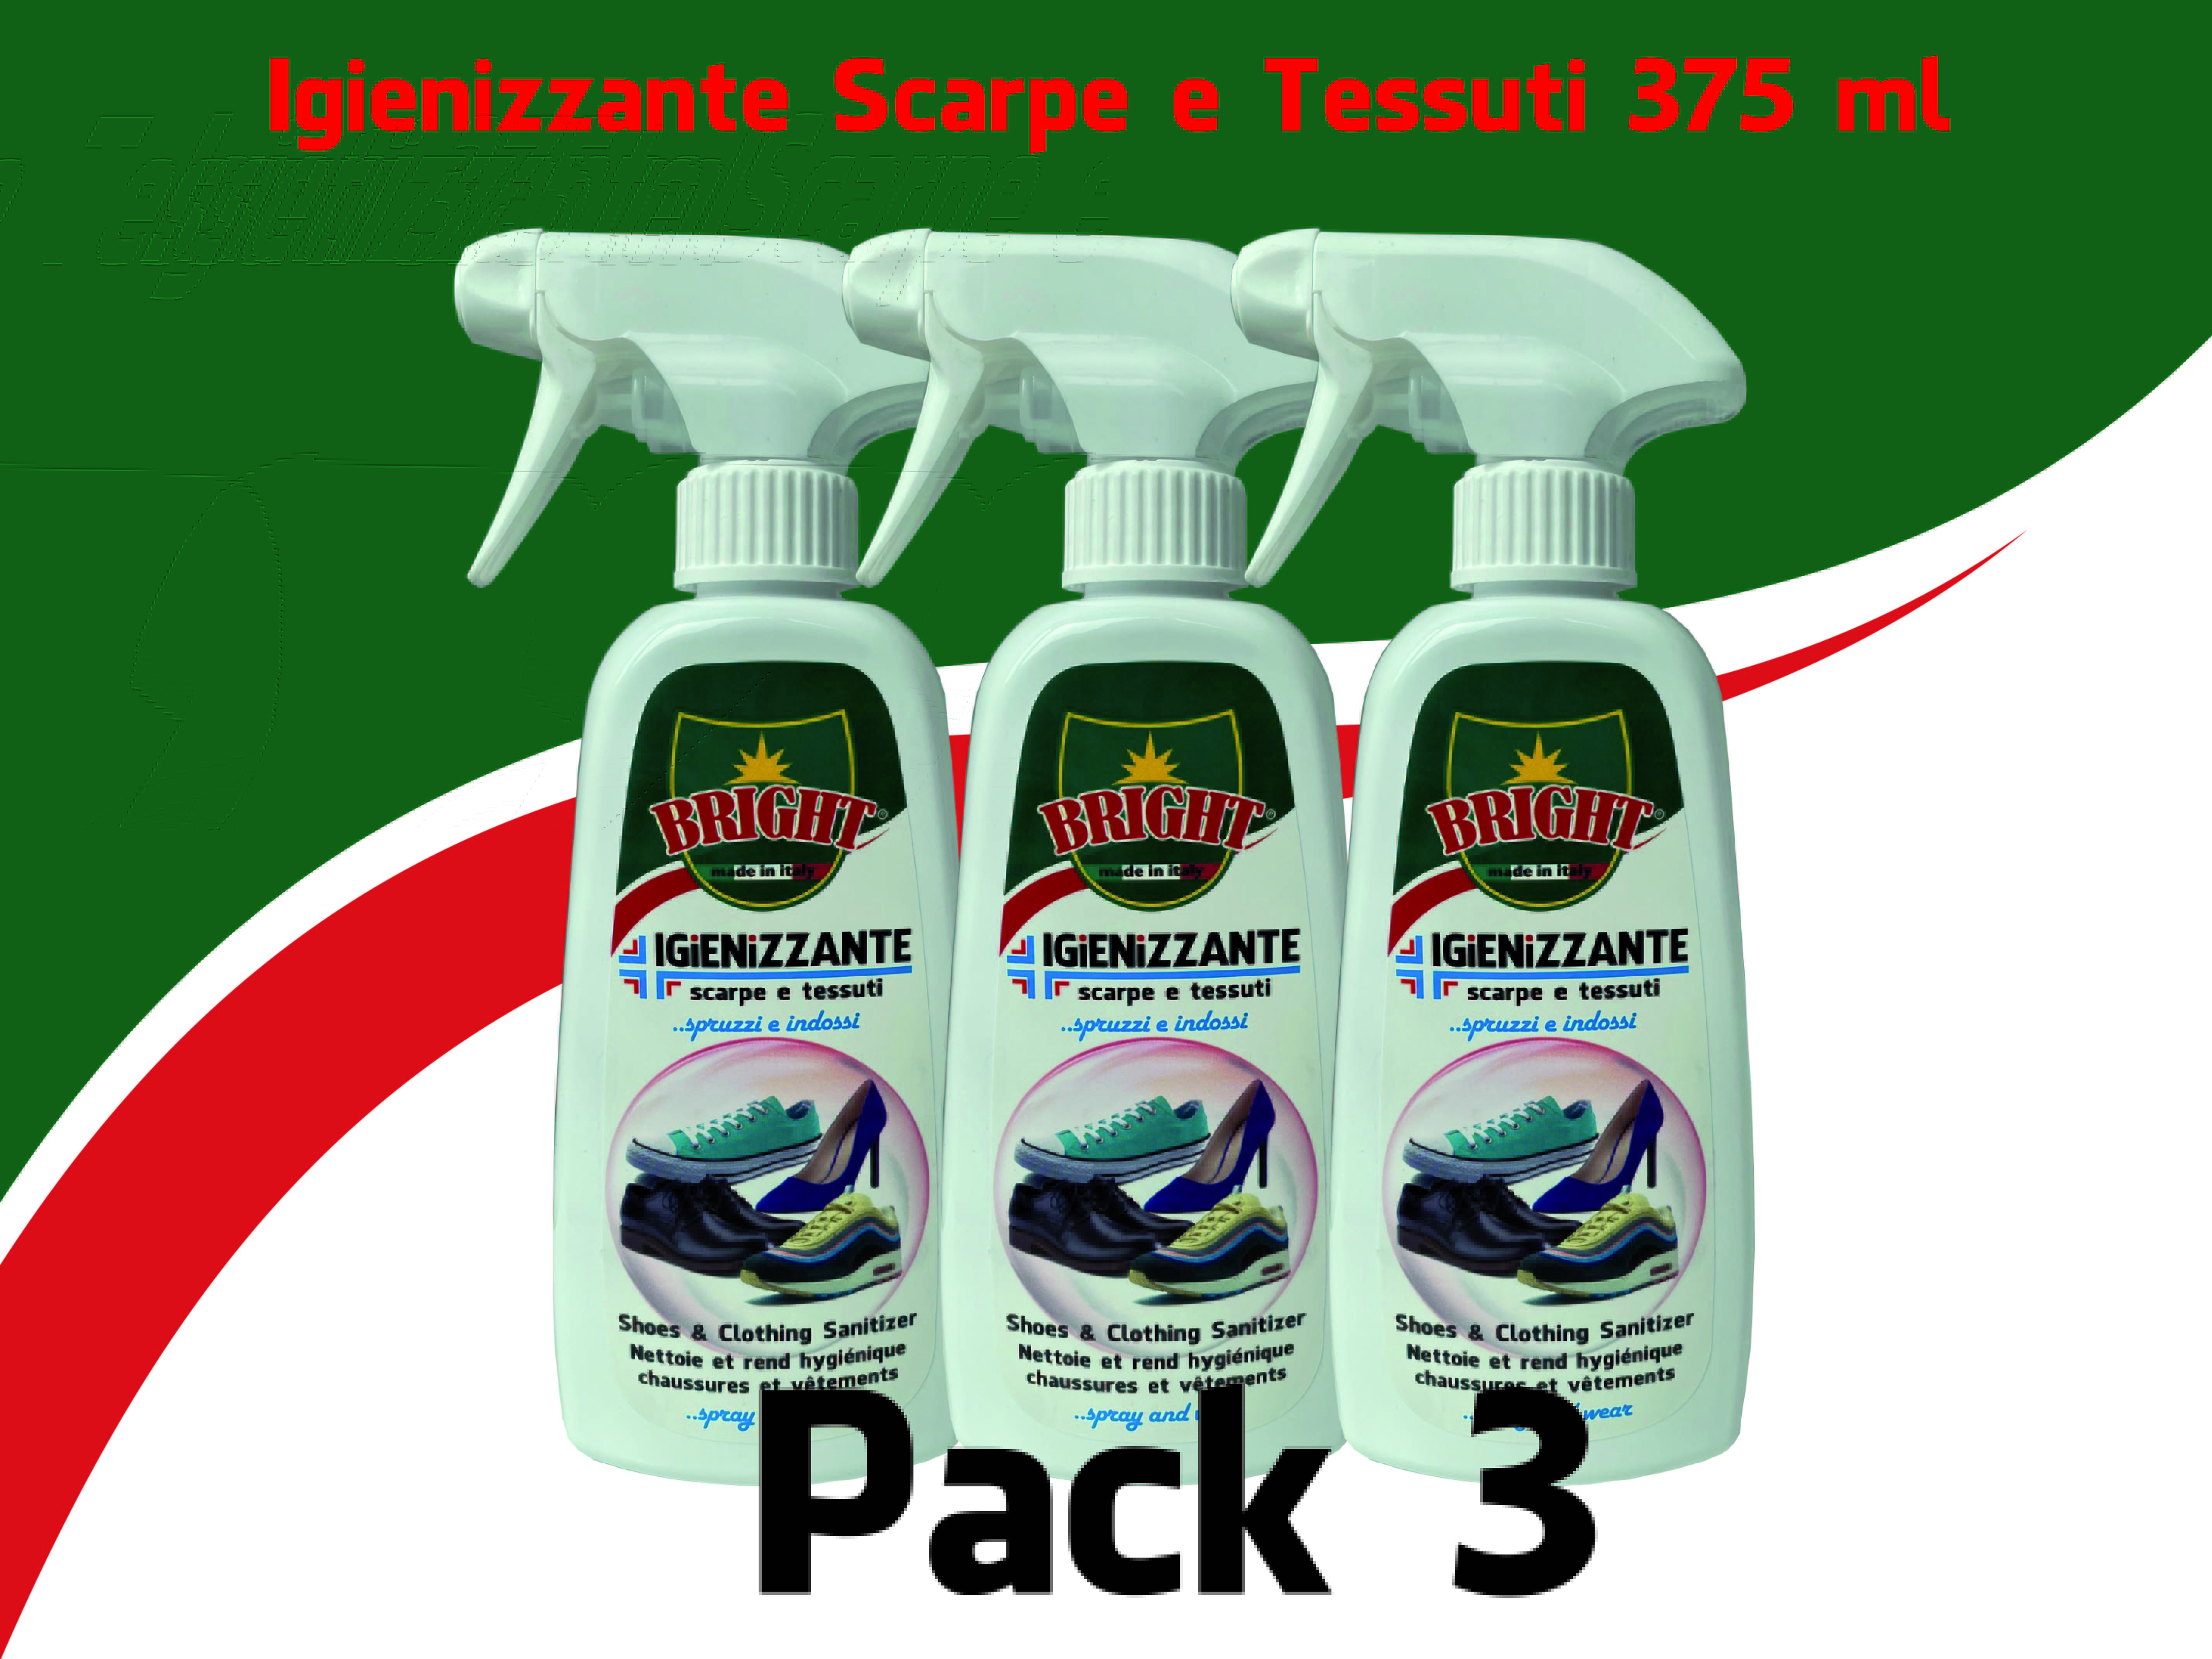 Igienizzante Scarpe e tessuti 375 ml PACK 3 – Technowax SRL Italia